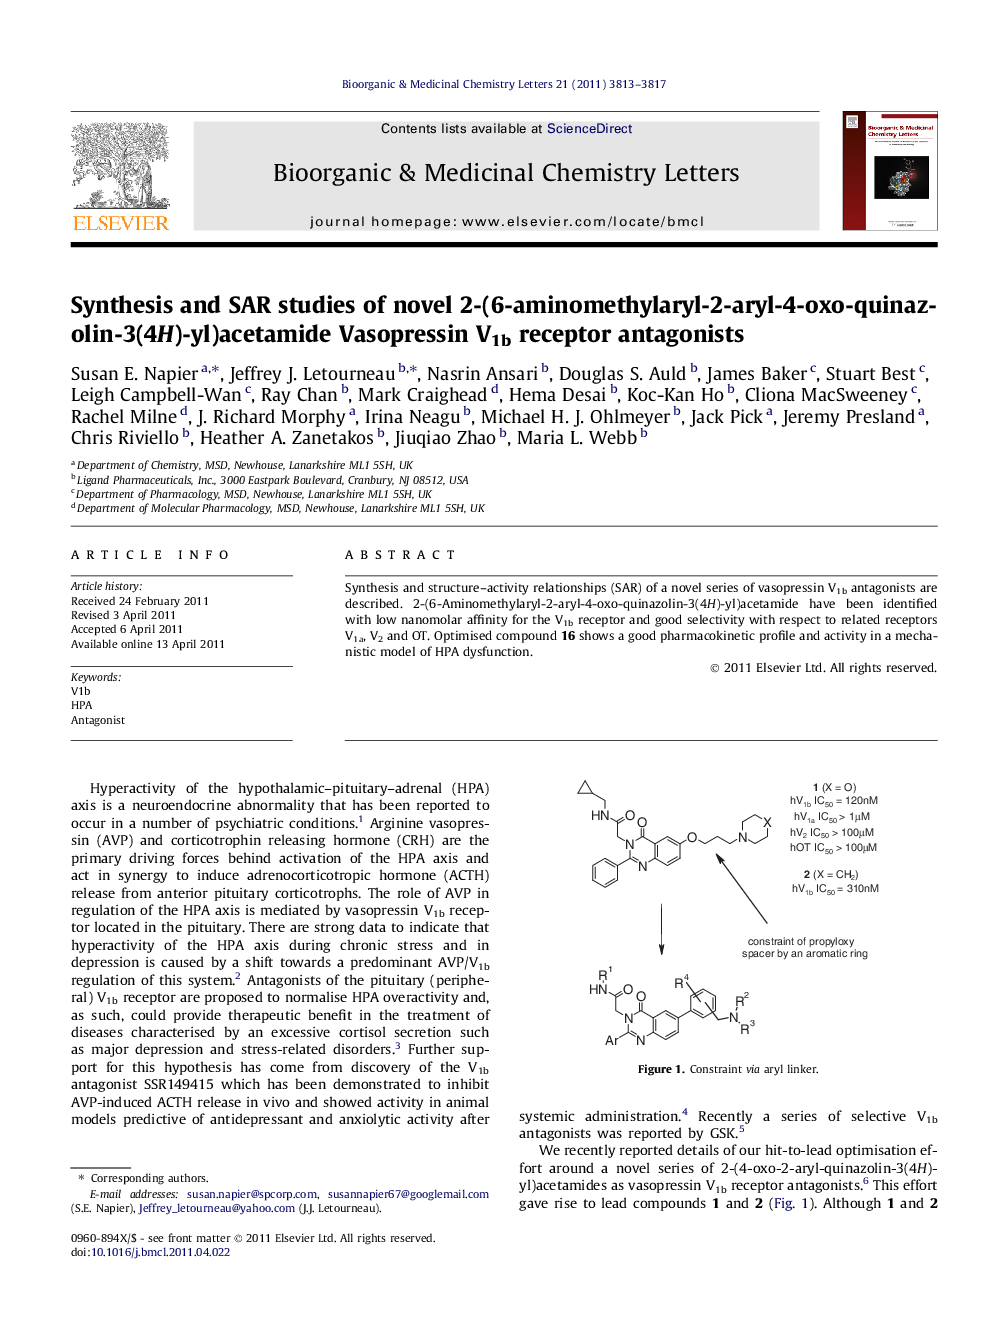 Synthesis and SAR studies of novel 2-(6-aminomethylaryl-2-aryl-4-oxo-quinazolin-3(4H)-yl)acetamide Vasopressin V1b receptor antagonists